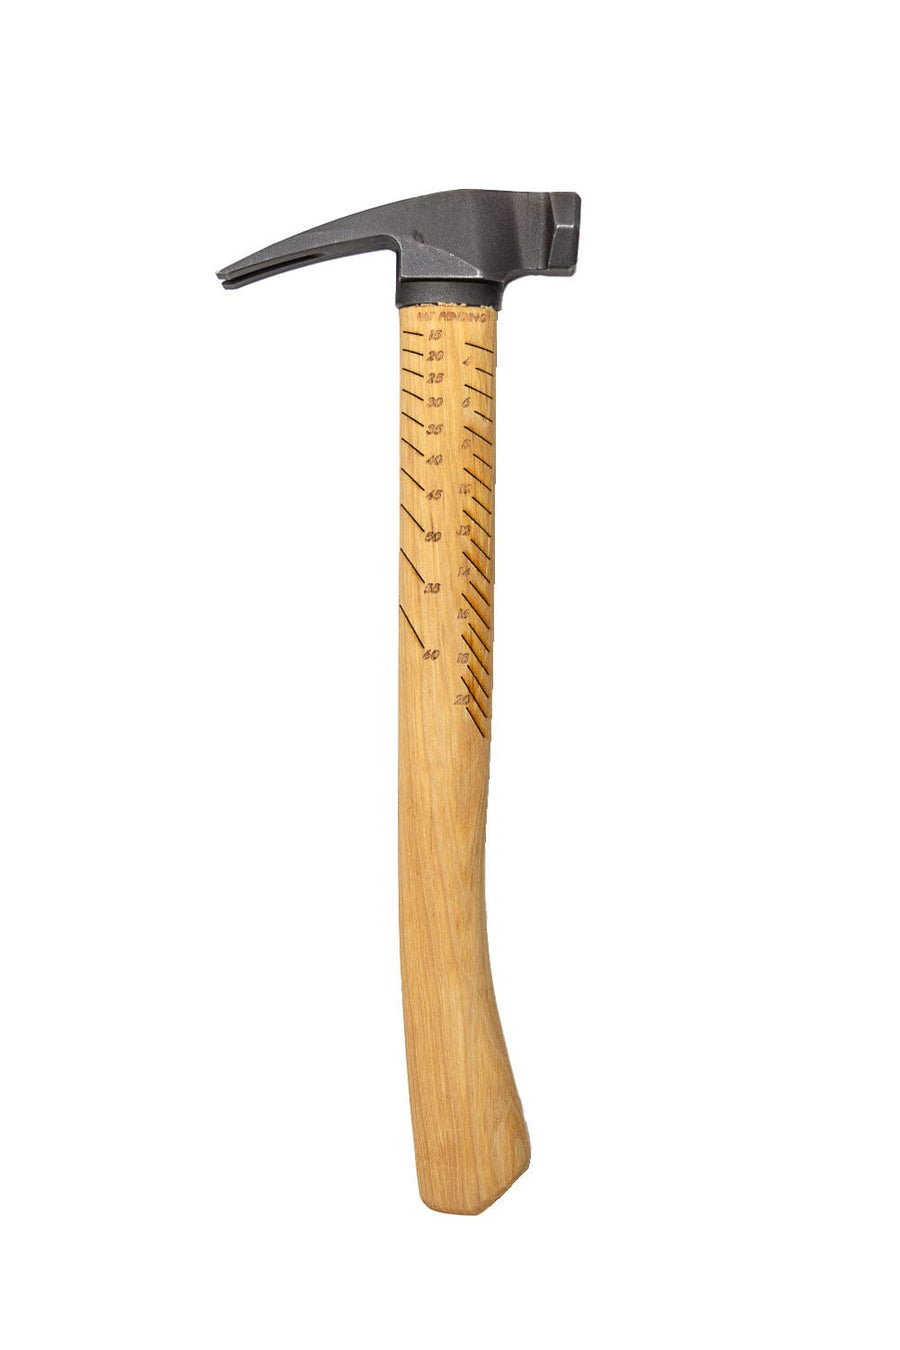 16 oz. Steel Hammer | Hickory Handle Hickory Handle Boss Hammer Co. 